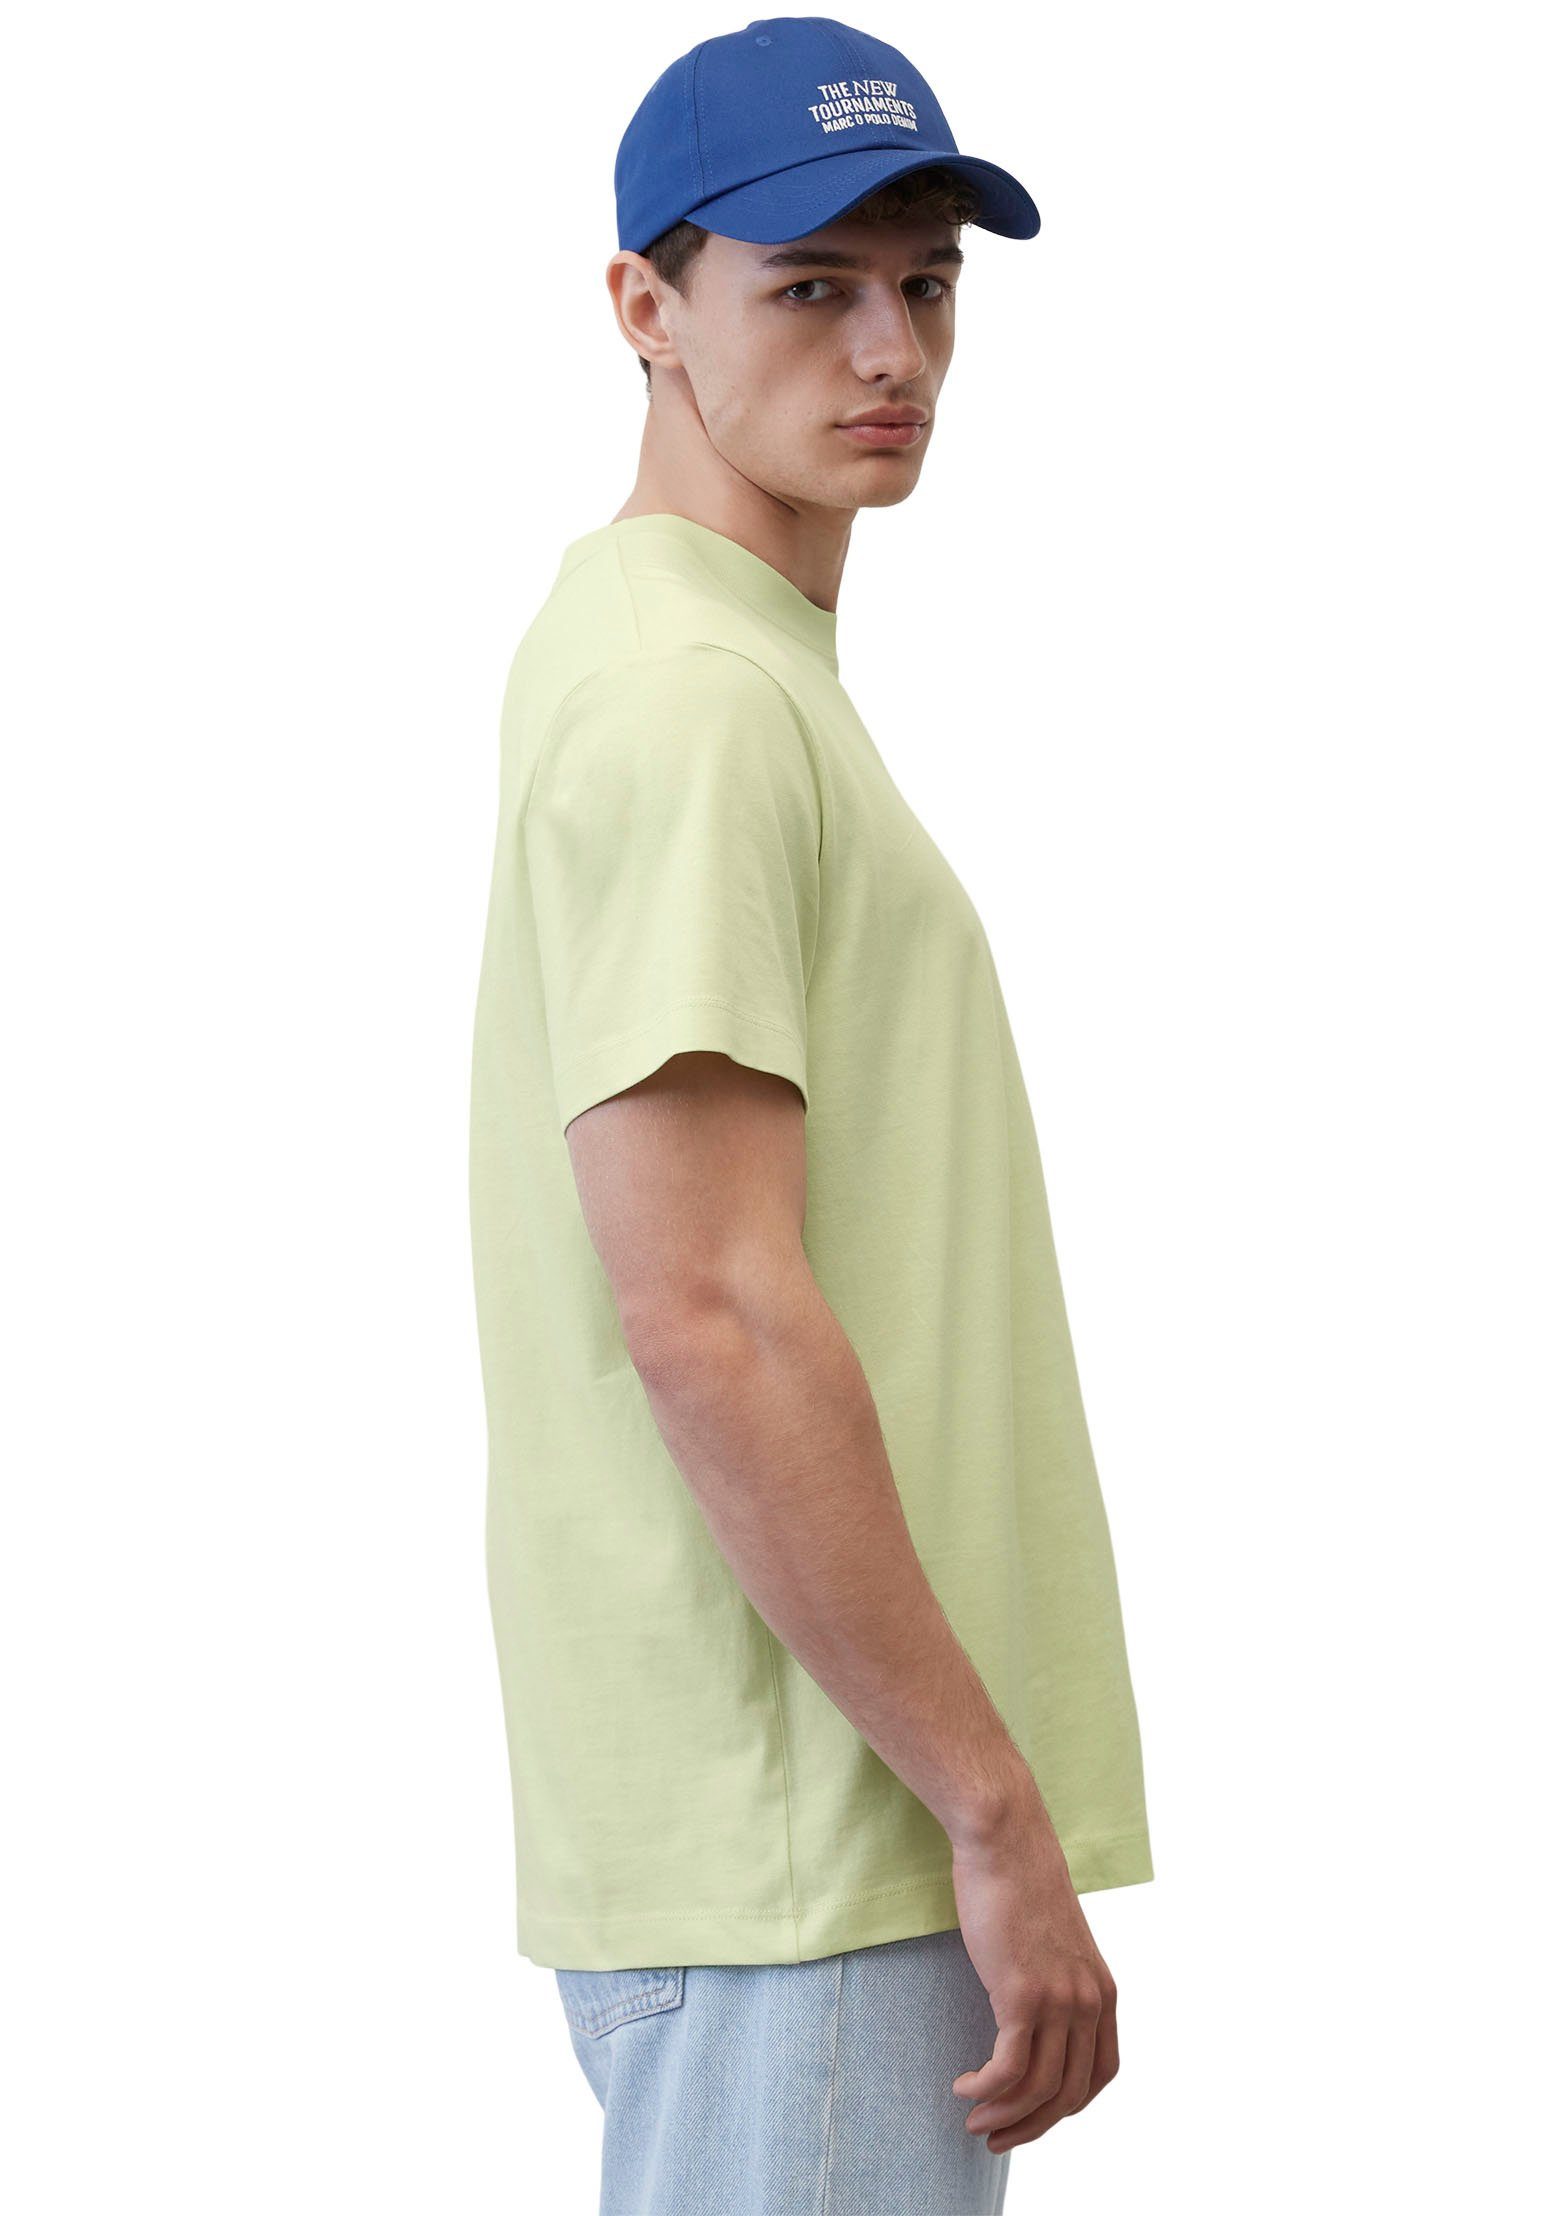 Marc O'Polo mit T-Shirt Logo-Druck lime DENIM kleinem